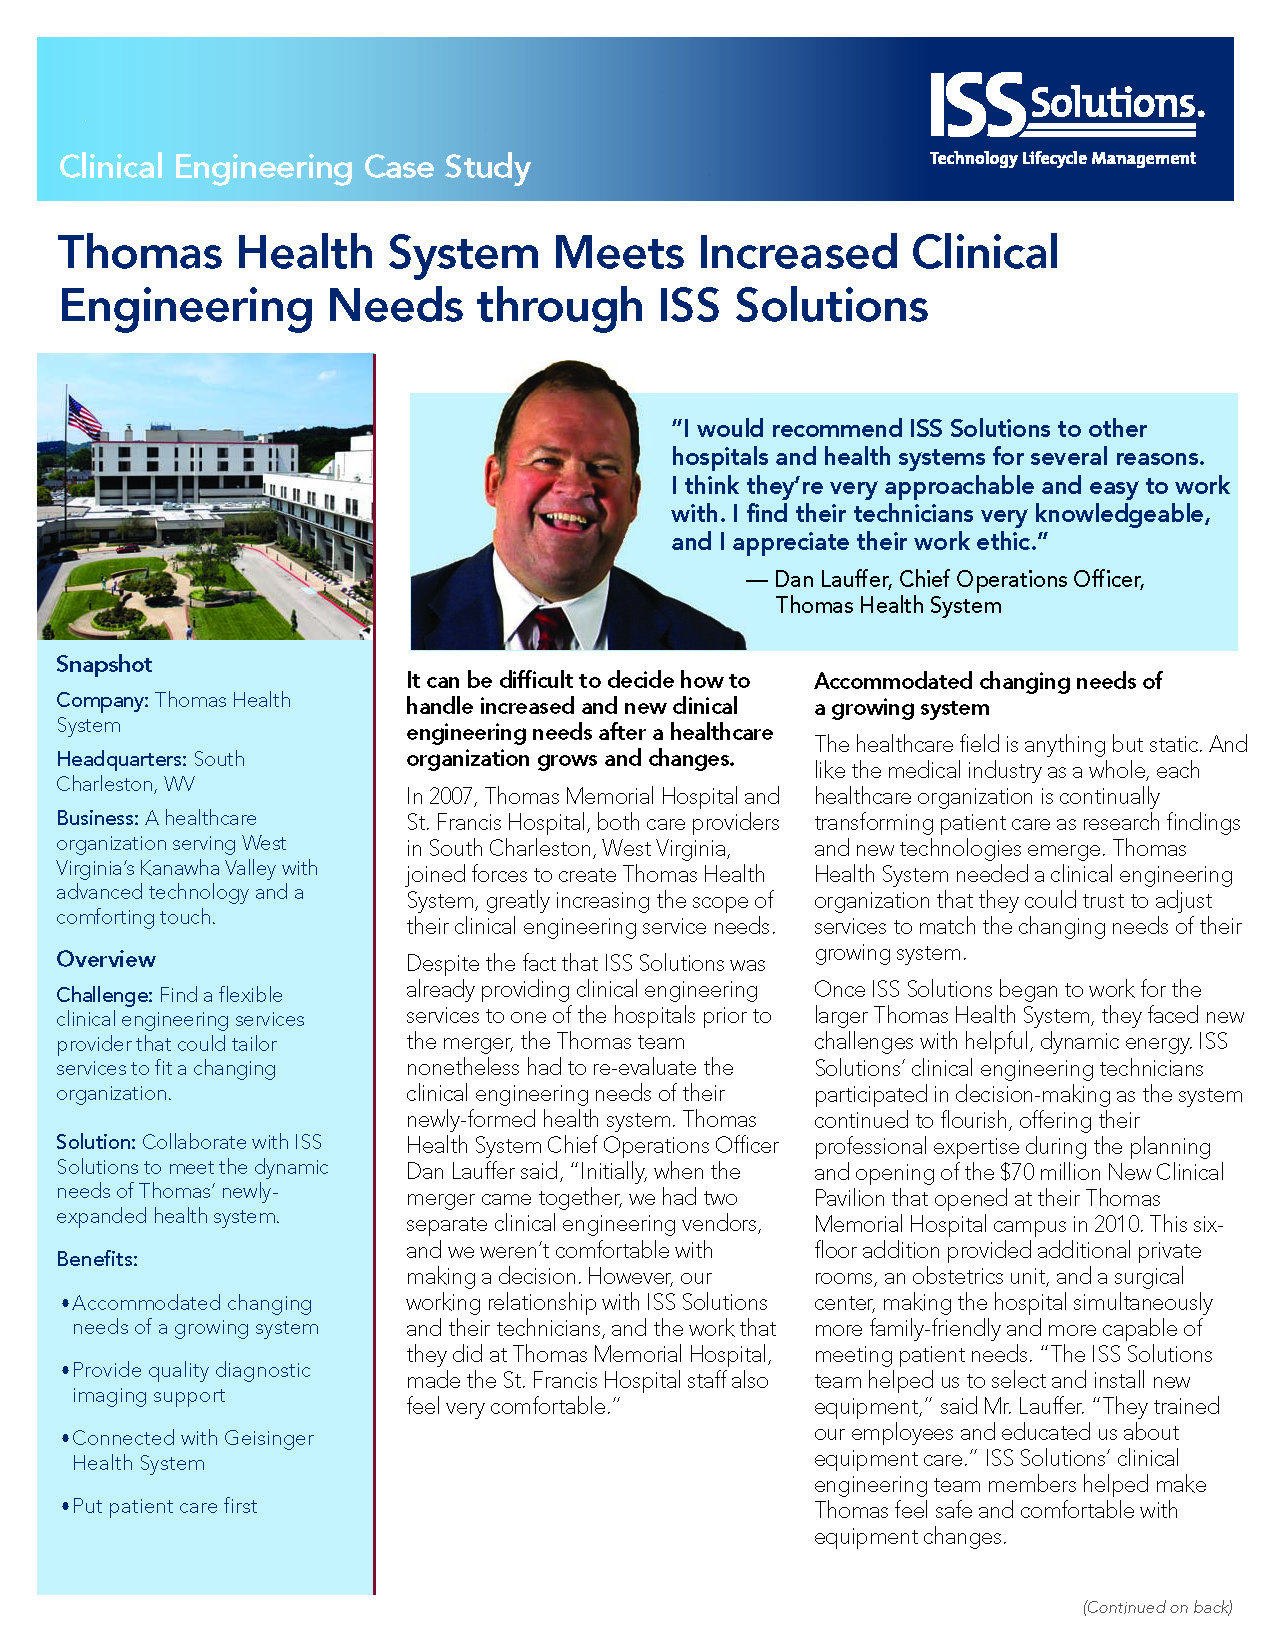 Thomas Health System Case Study